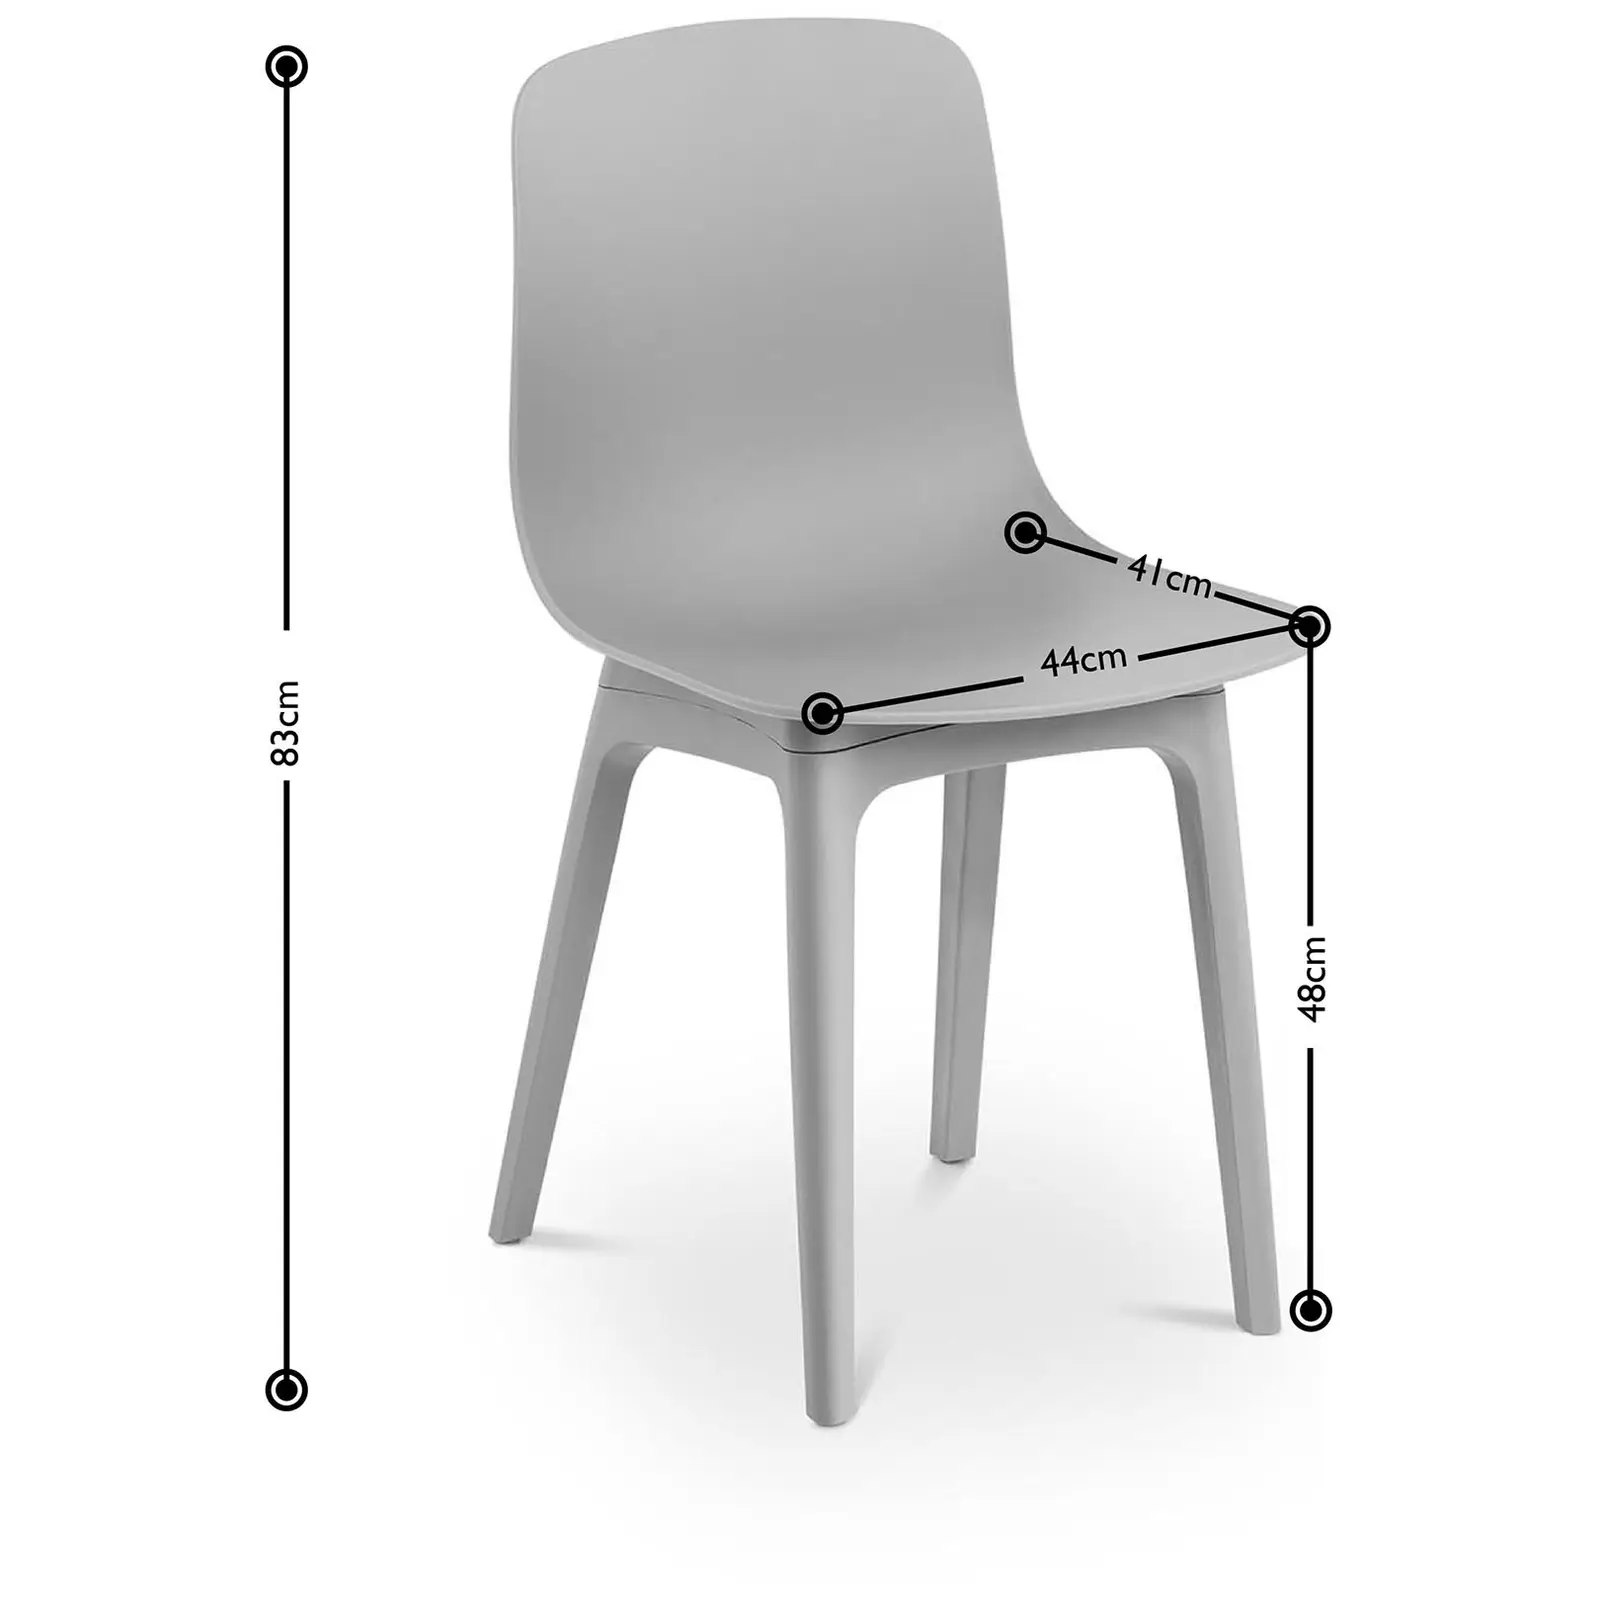 Silla - set de 2 - hasta 150 kg - superficie de sentado 44 x 41 cm - gris